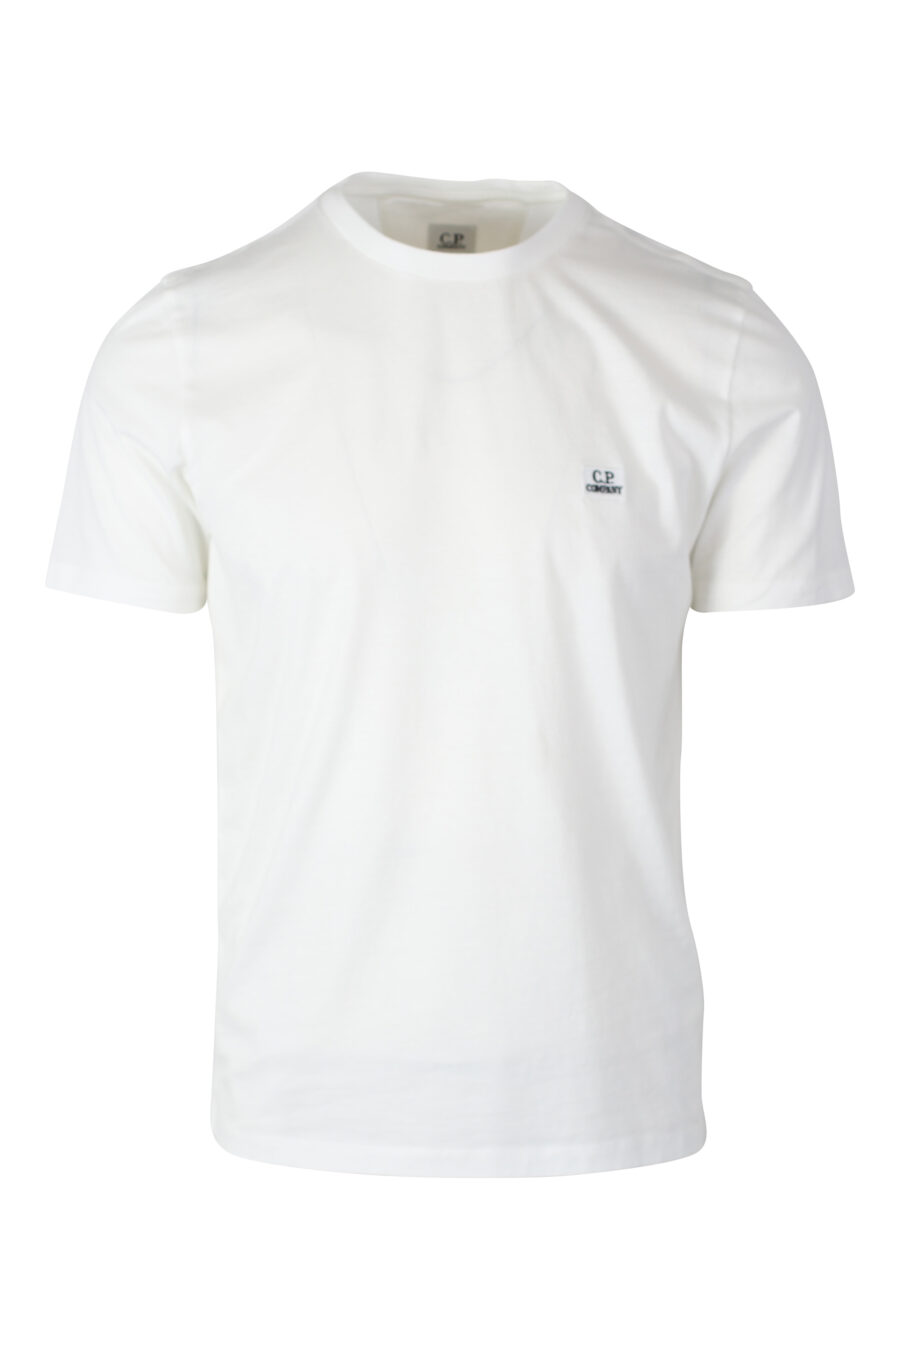 Camiseta blanca con minilogo parche - IMG 2406